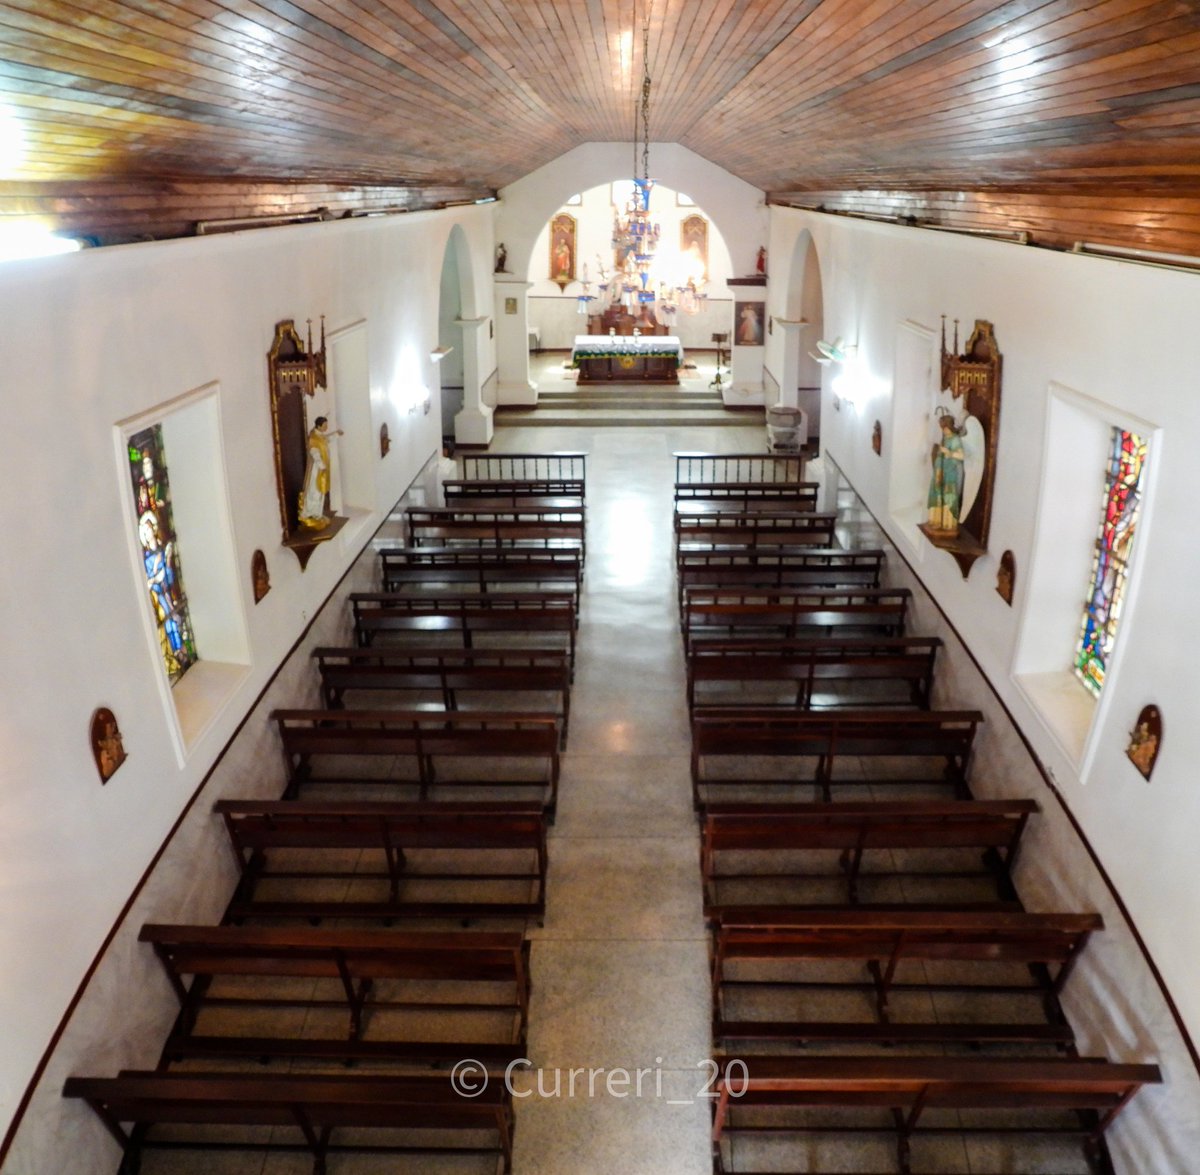 Primer Santuario de Maria Auxiliadora 1891 #guiripa #sancasimiro.#aragua #venezuela Diócesis de #maracay #travelphotography #History #iglesia